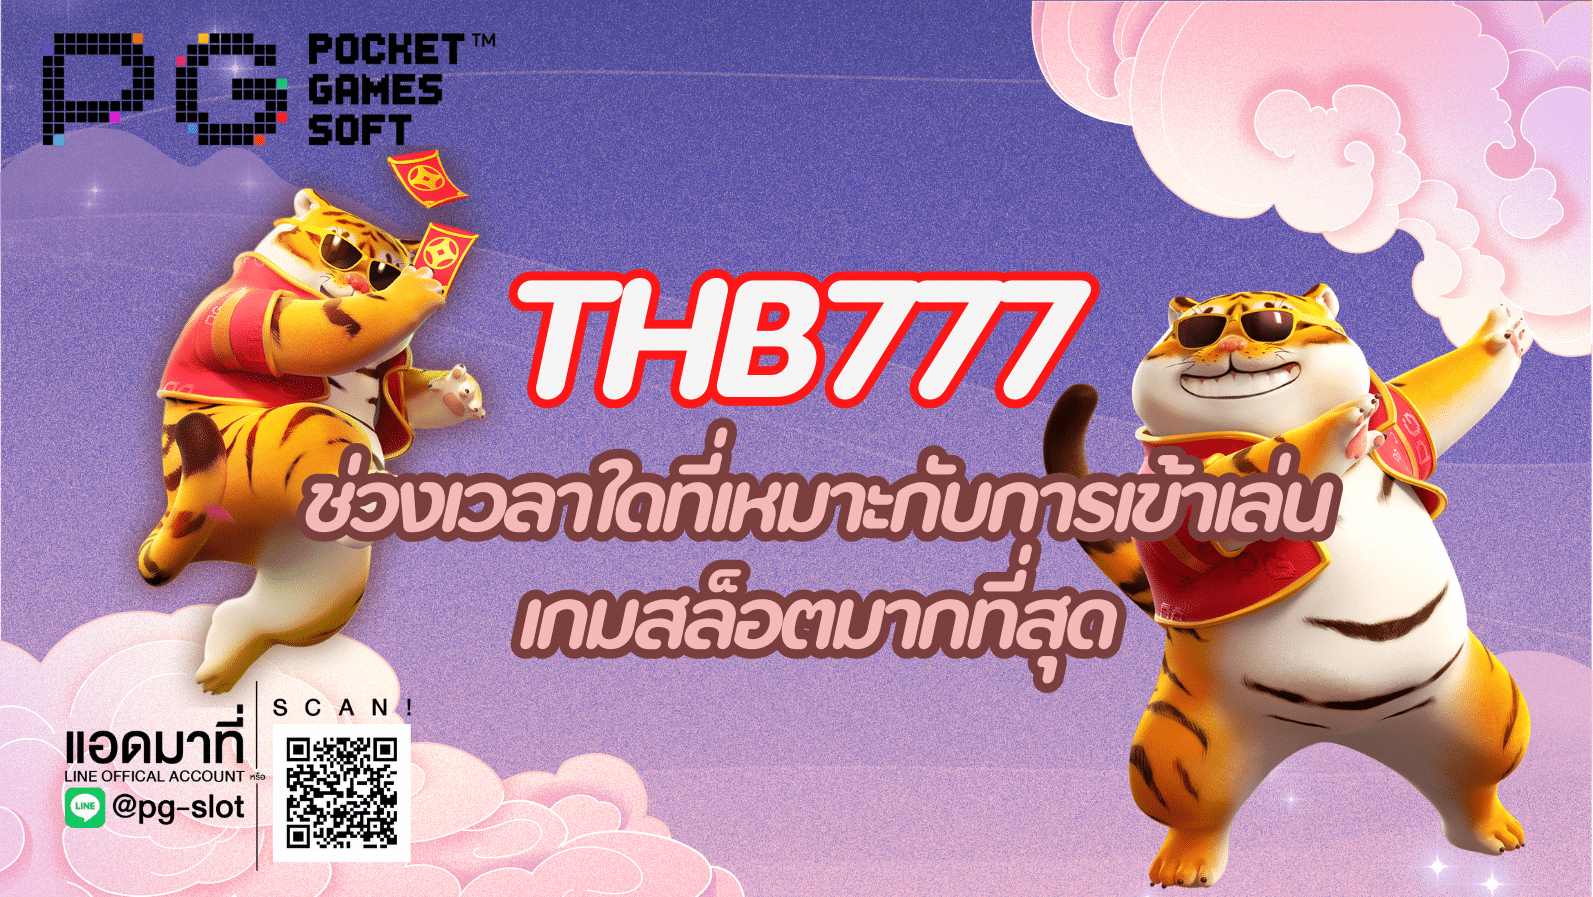 THB777